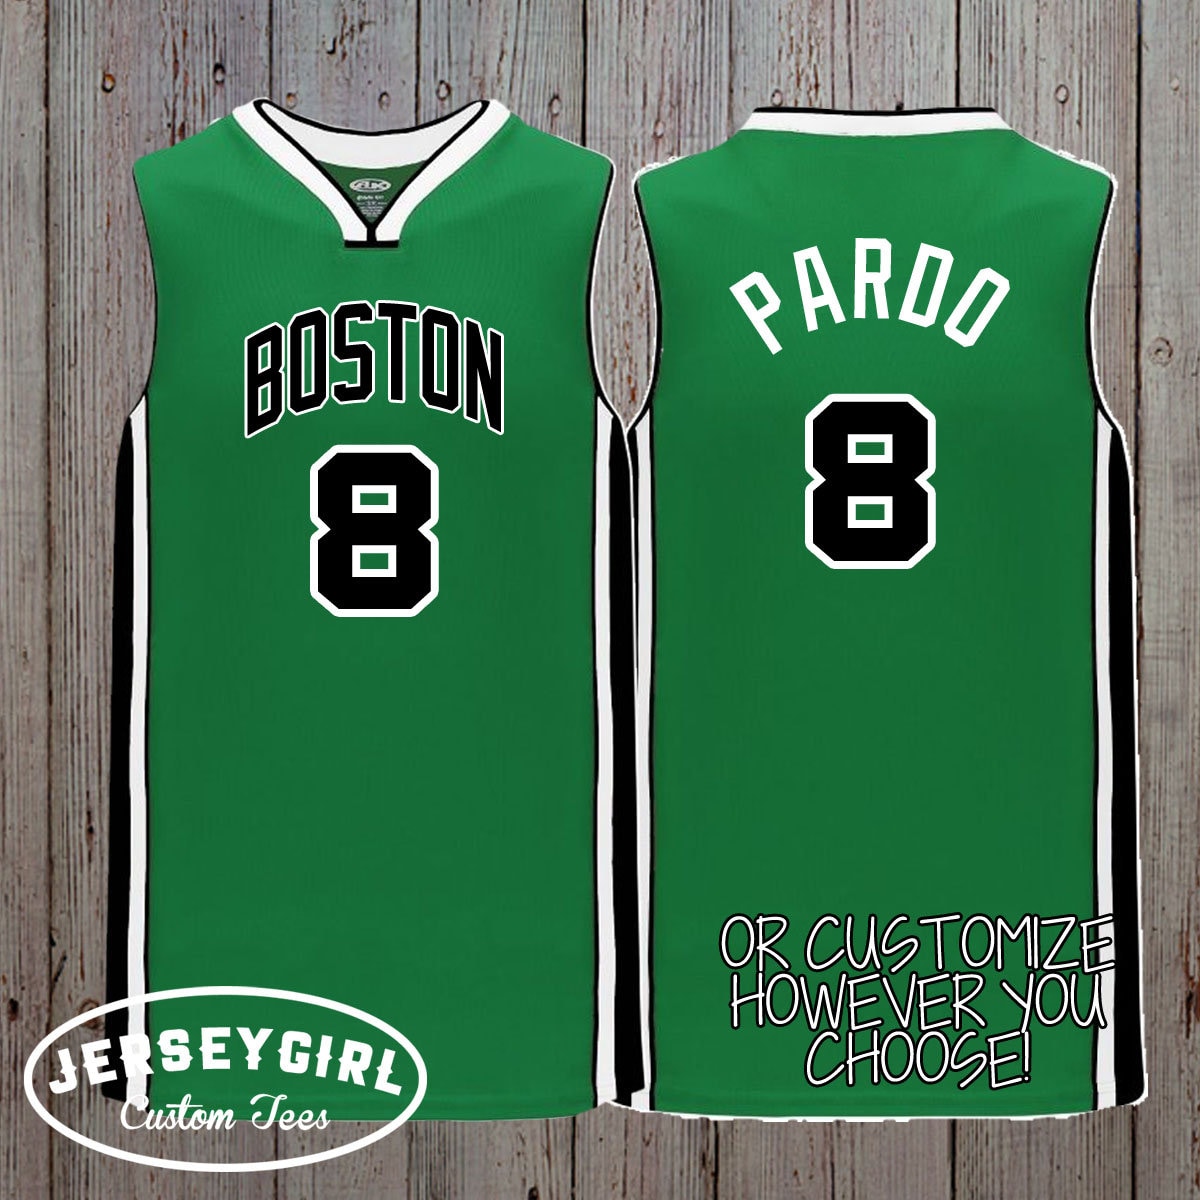 JerseyGirlCustomTees Custom Shamrock Basketball Jersey with Name & Number, Birthday Basketball Jersey, Boston Basketball Jerseys, Green and White Jerseys